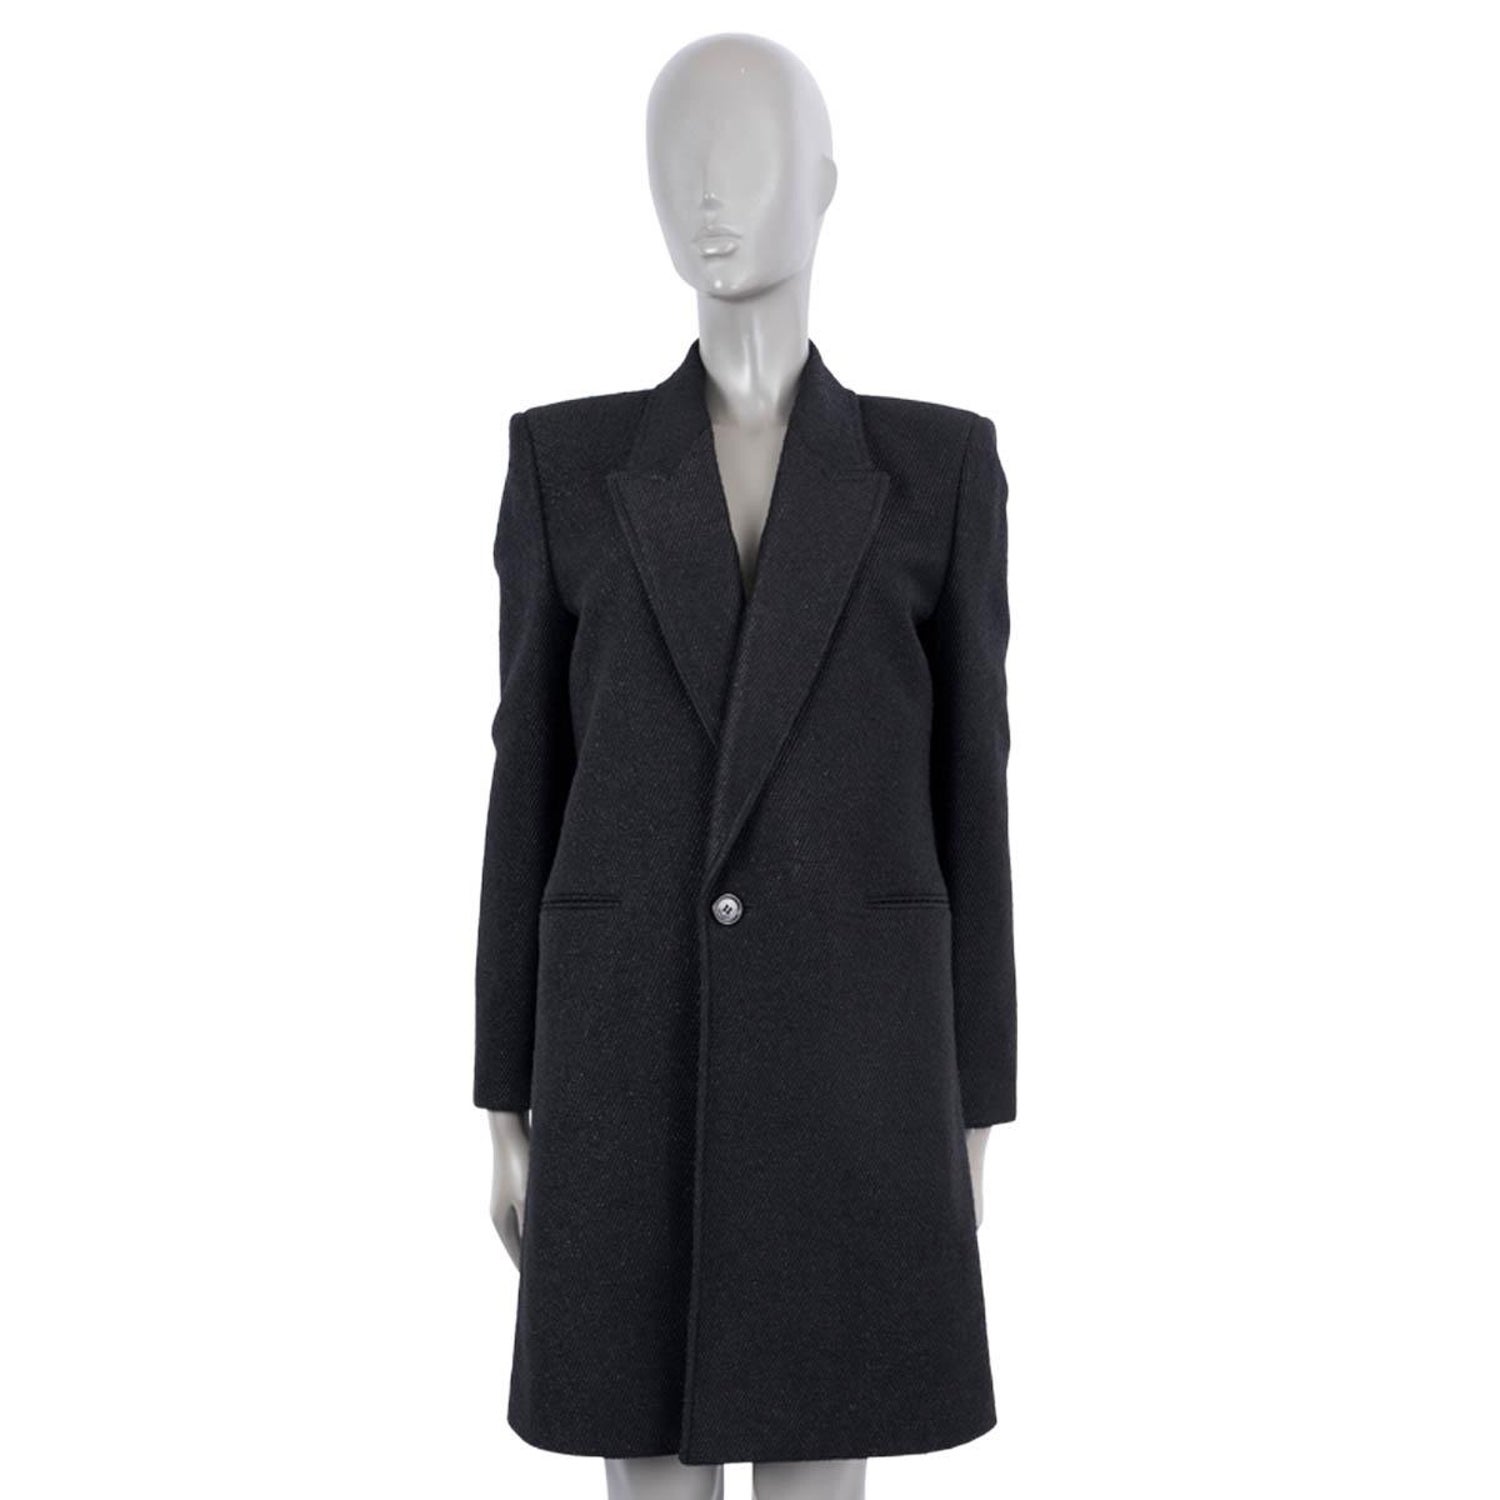 Louis Vuitton - Golden Trim Pea Coat - Black - Women - Size: 38 - Luxury